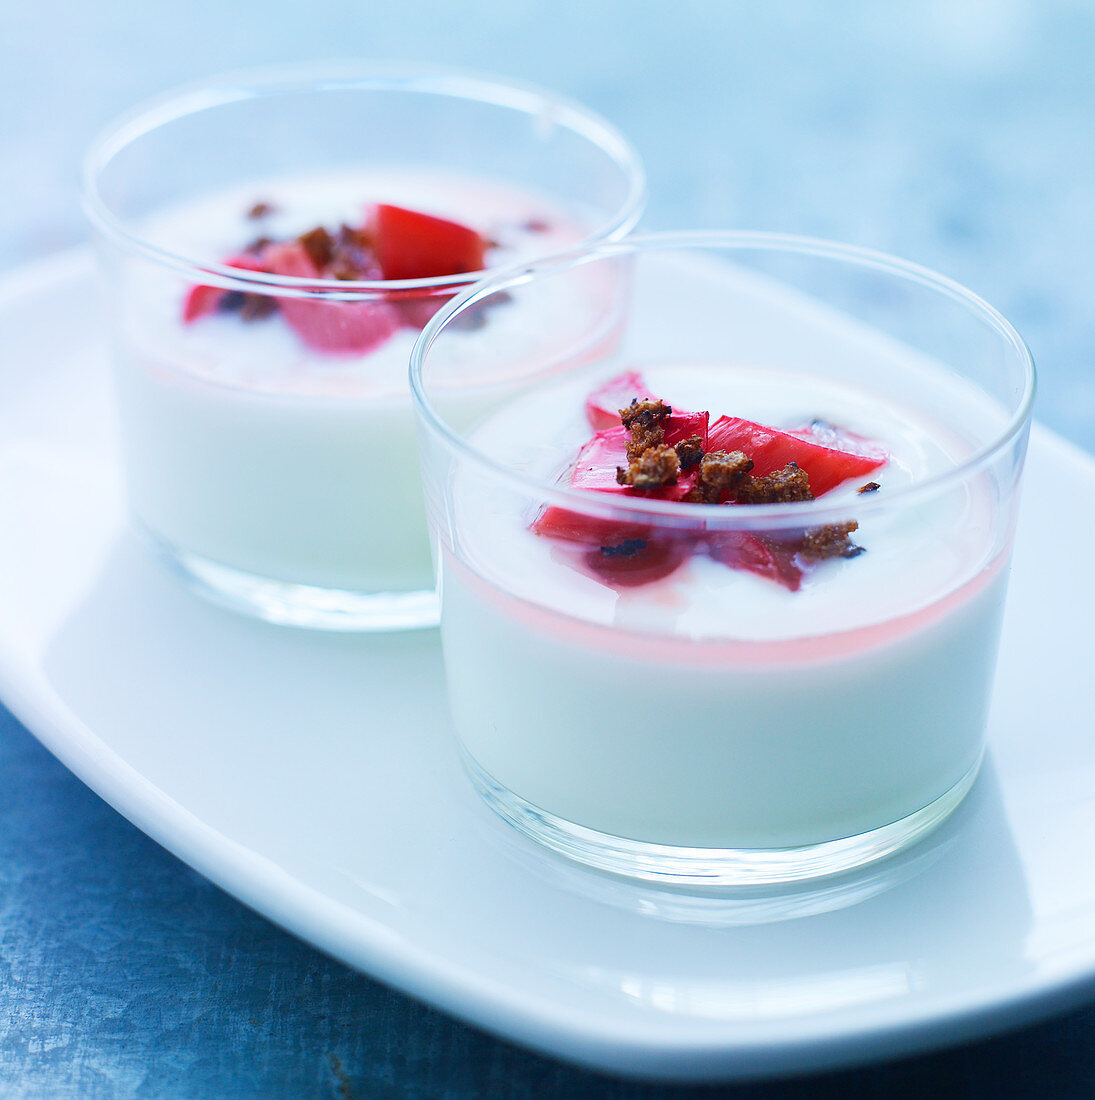 Creamy desserts with rhubarb